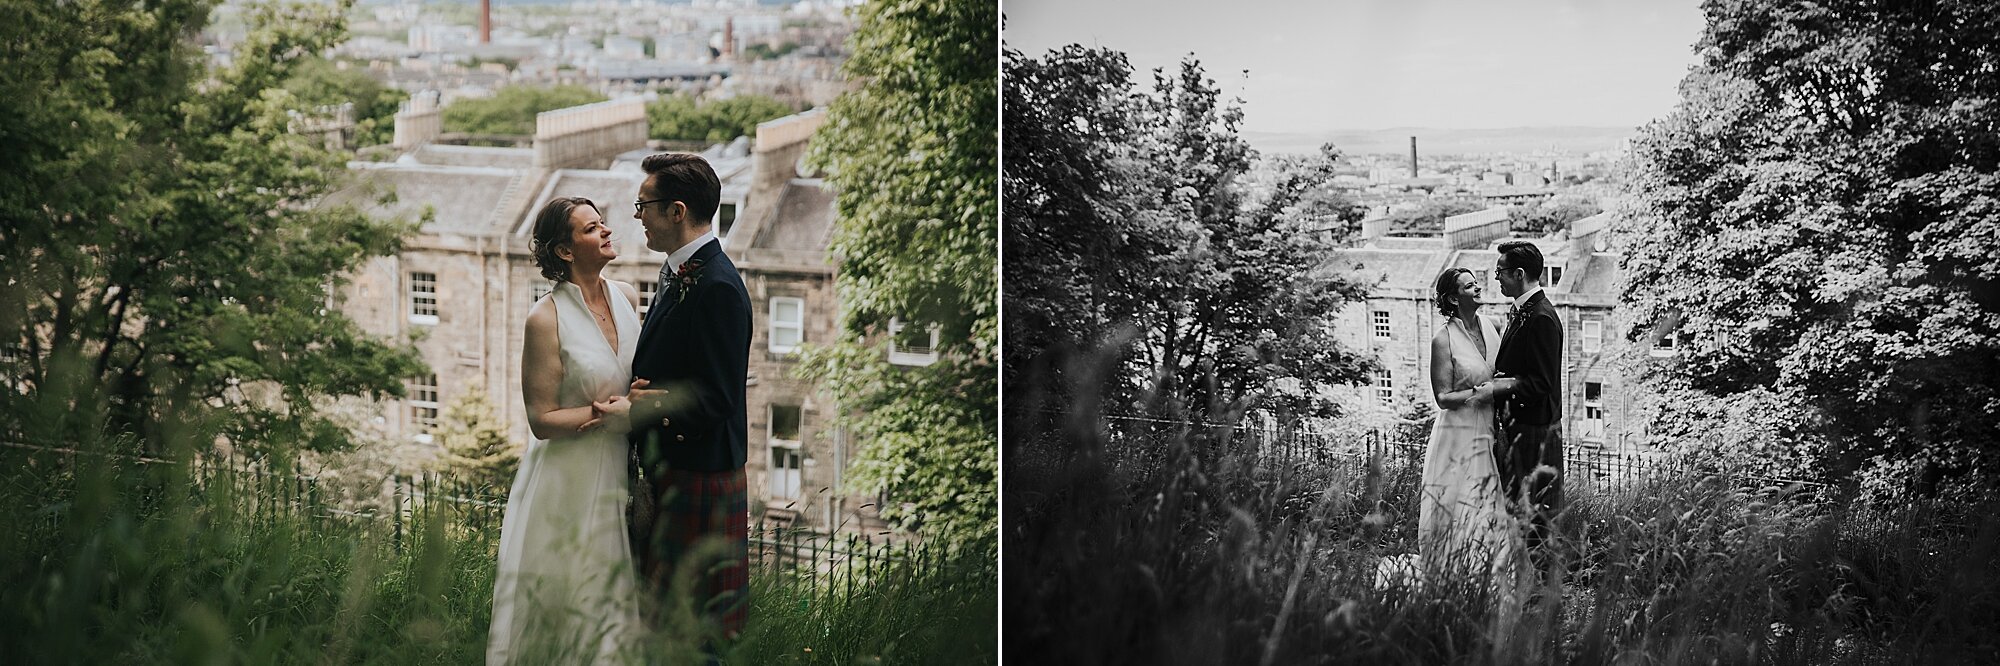 Edinburgh wedding-19.jpg